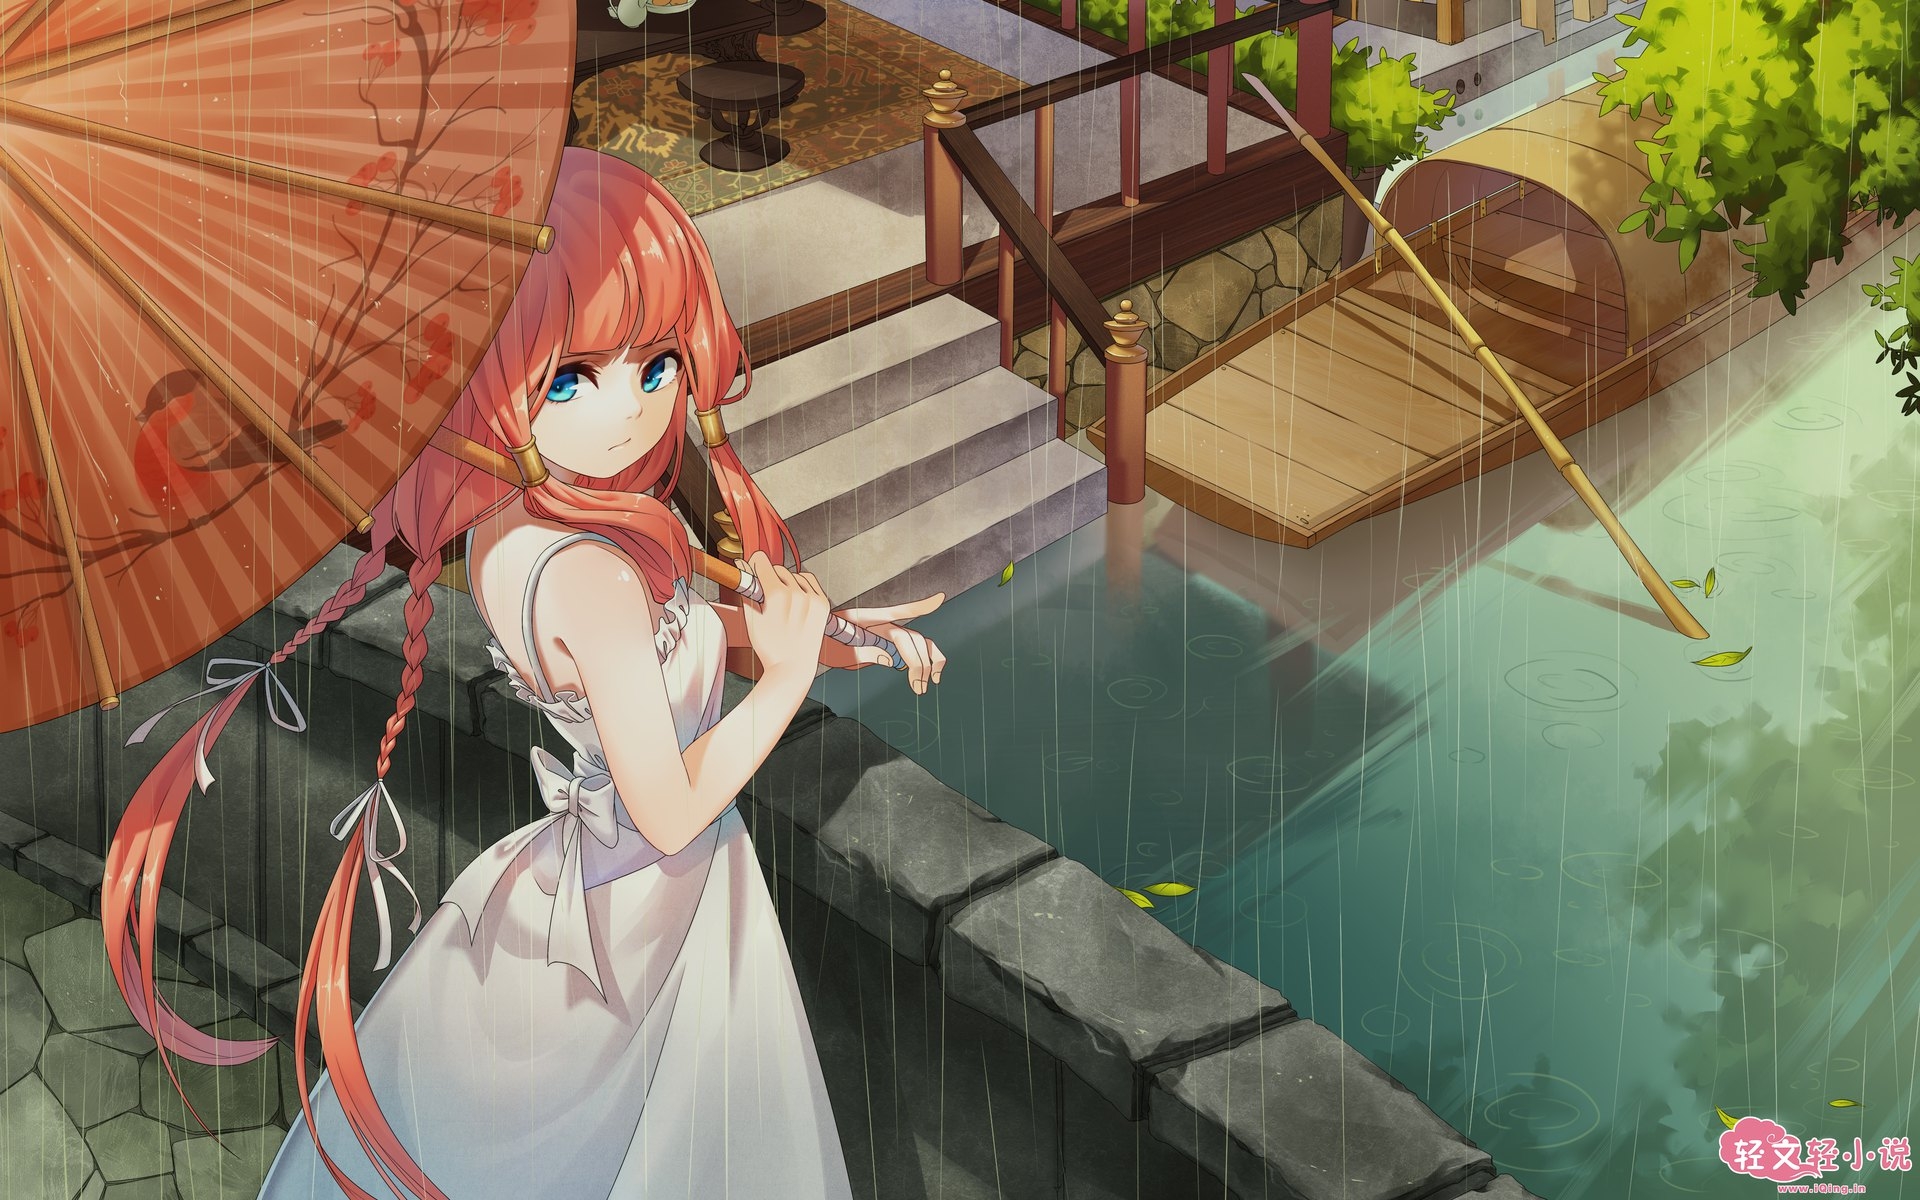 Download 1920x1200 Anime Girl, Umbrella, Rainy Day, Bridge